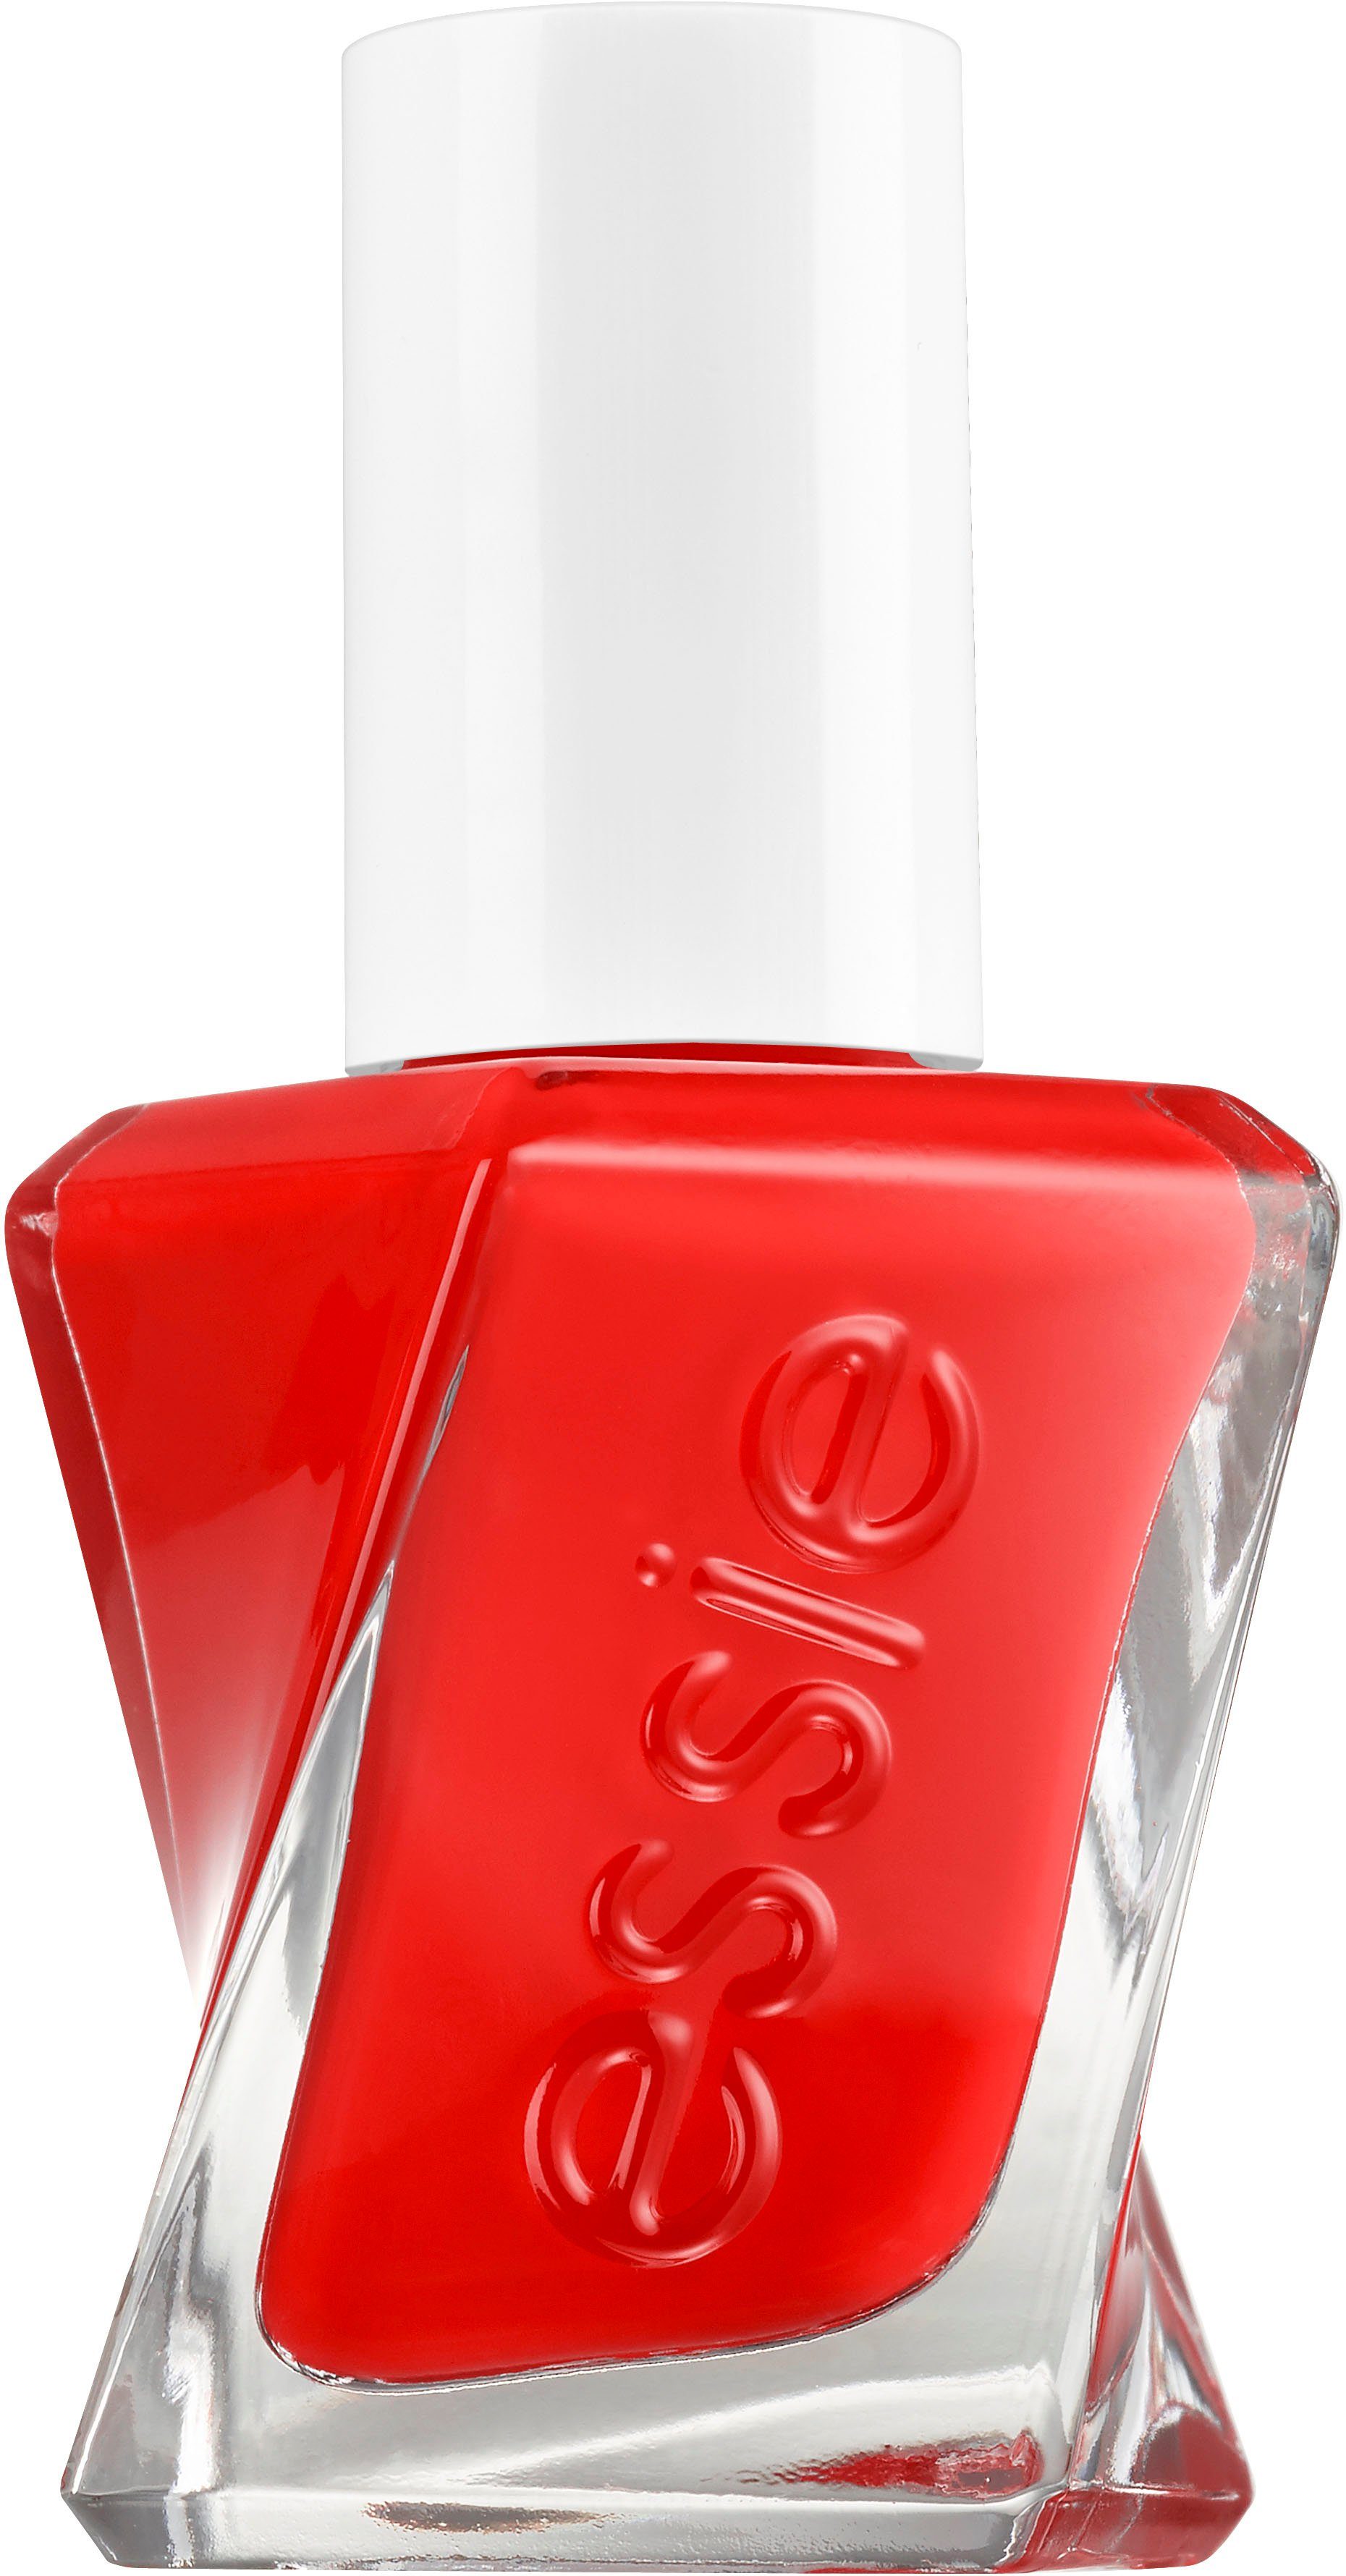 Rot Nr. hot Gel-Nagellack 470 Couture sizzling Gel essie